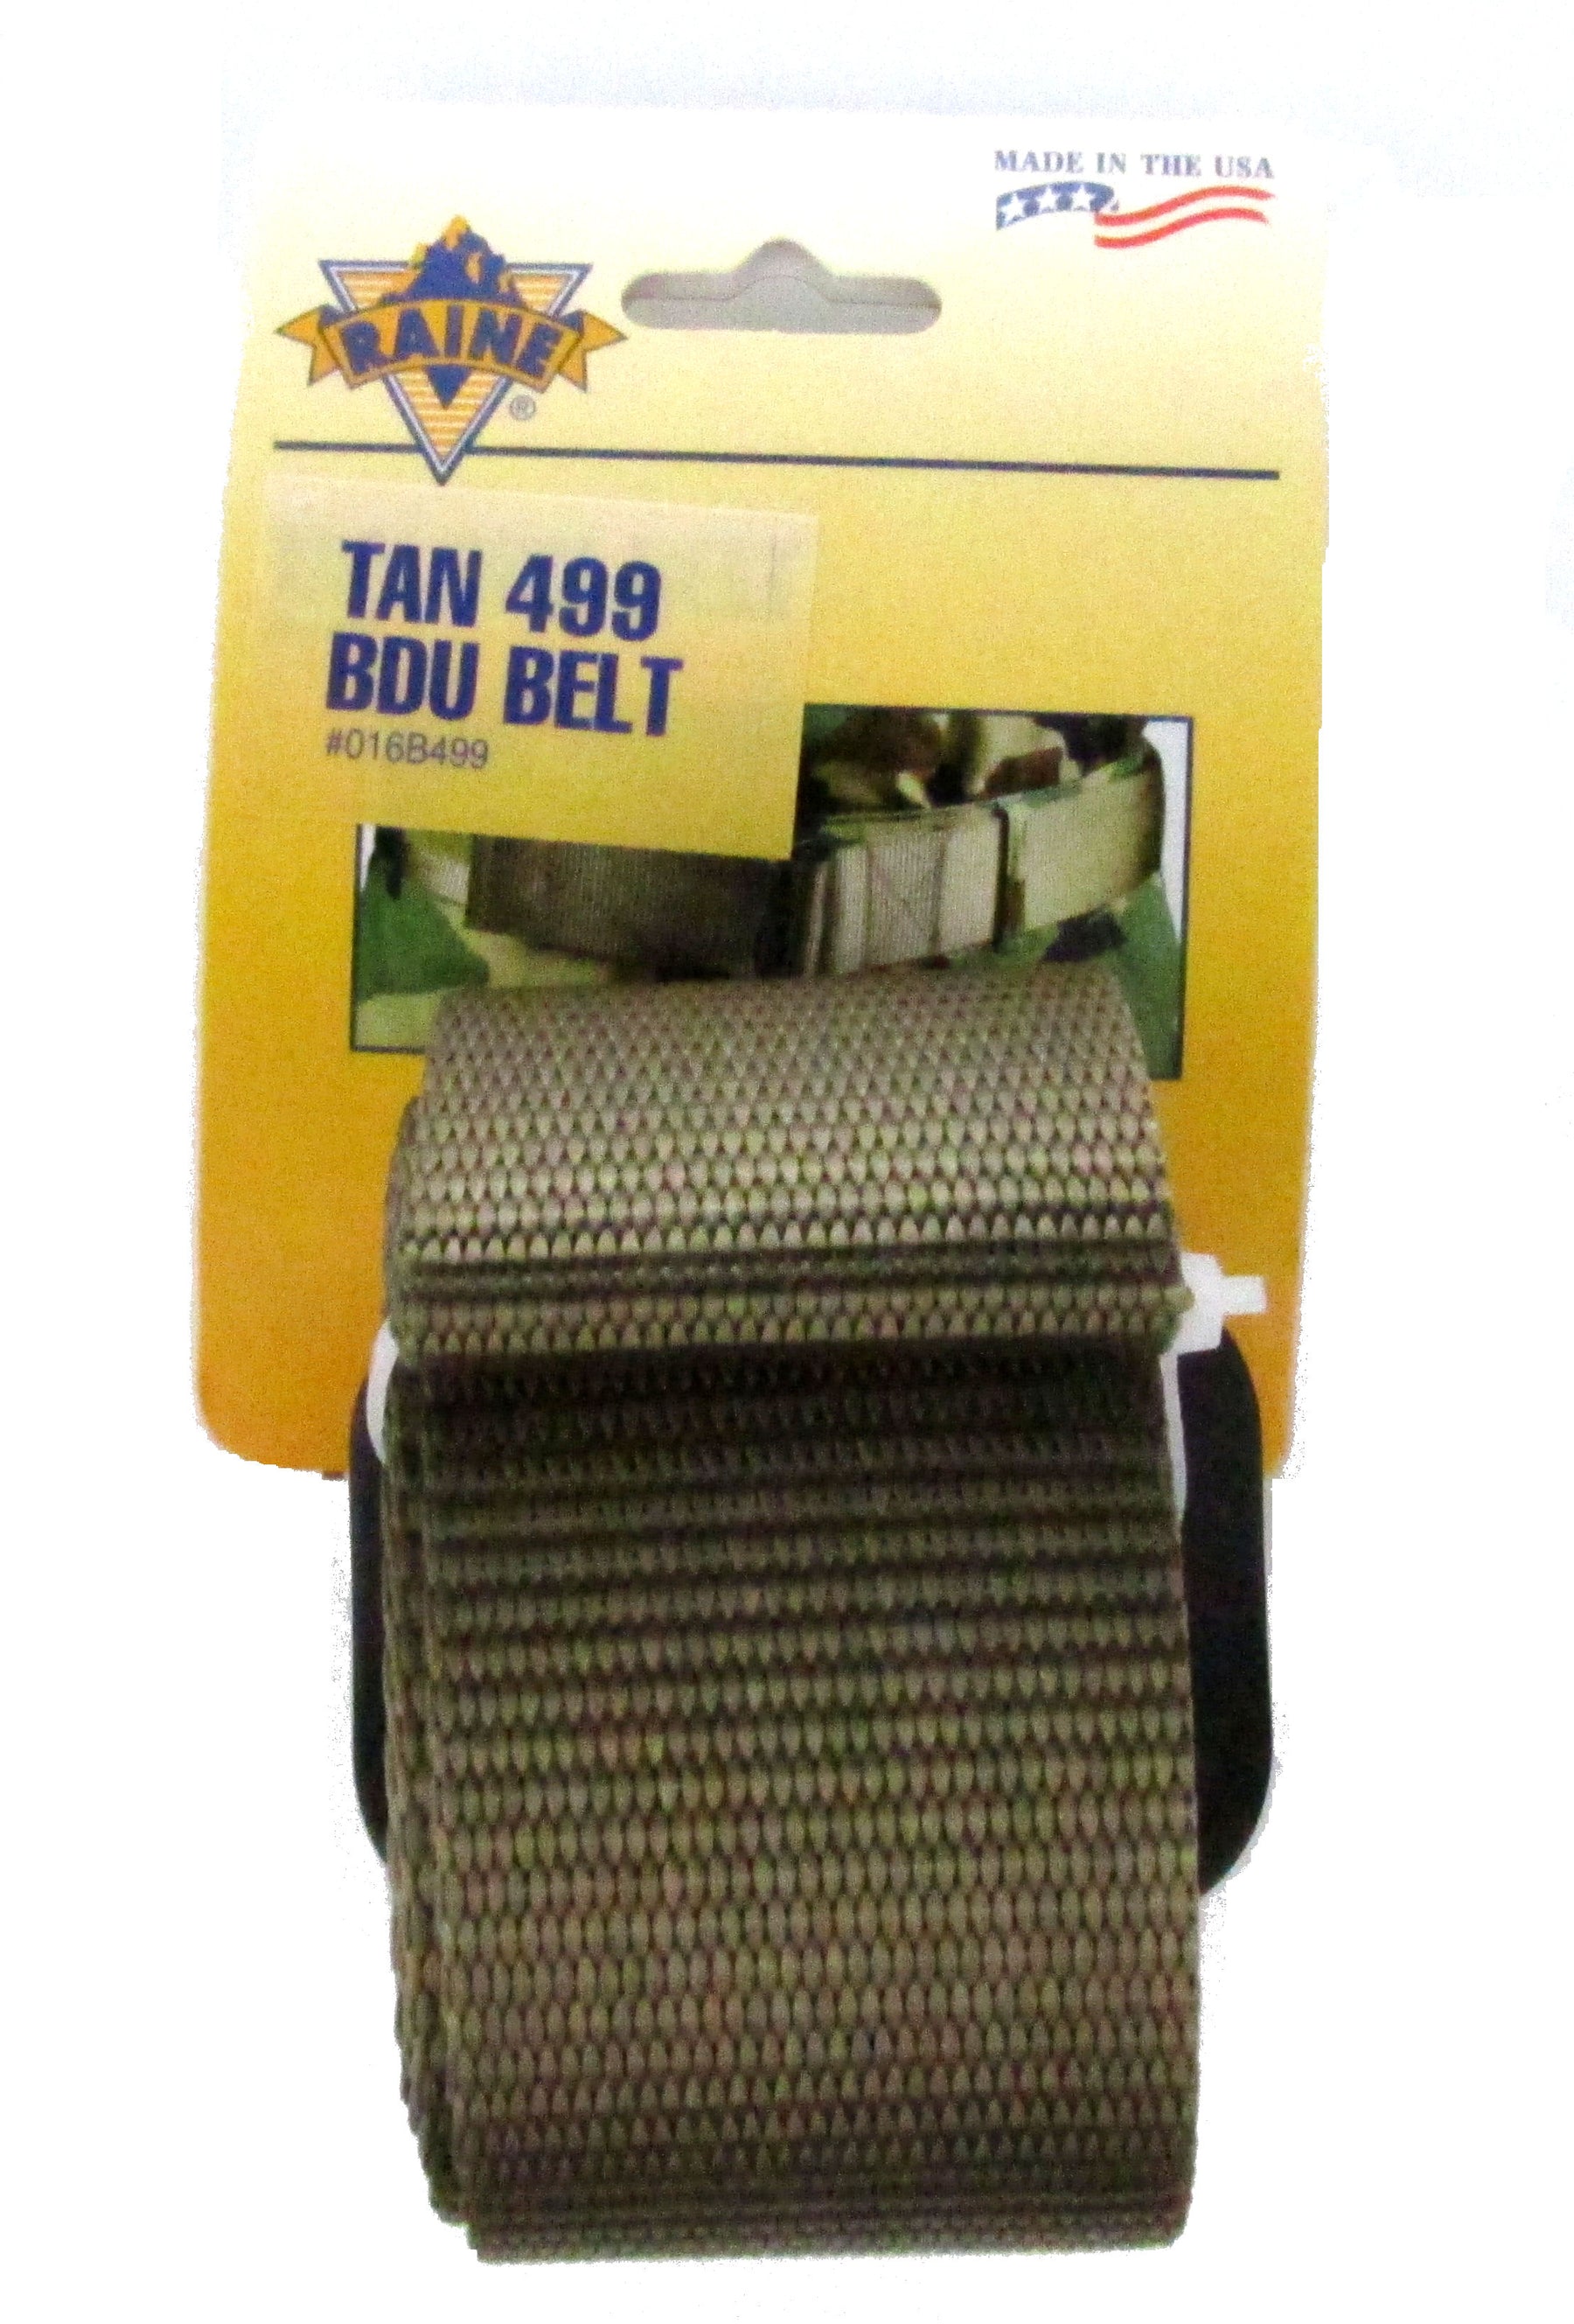 Military Rigger Belt – Raine Tactical Gear